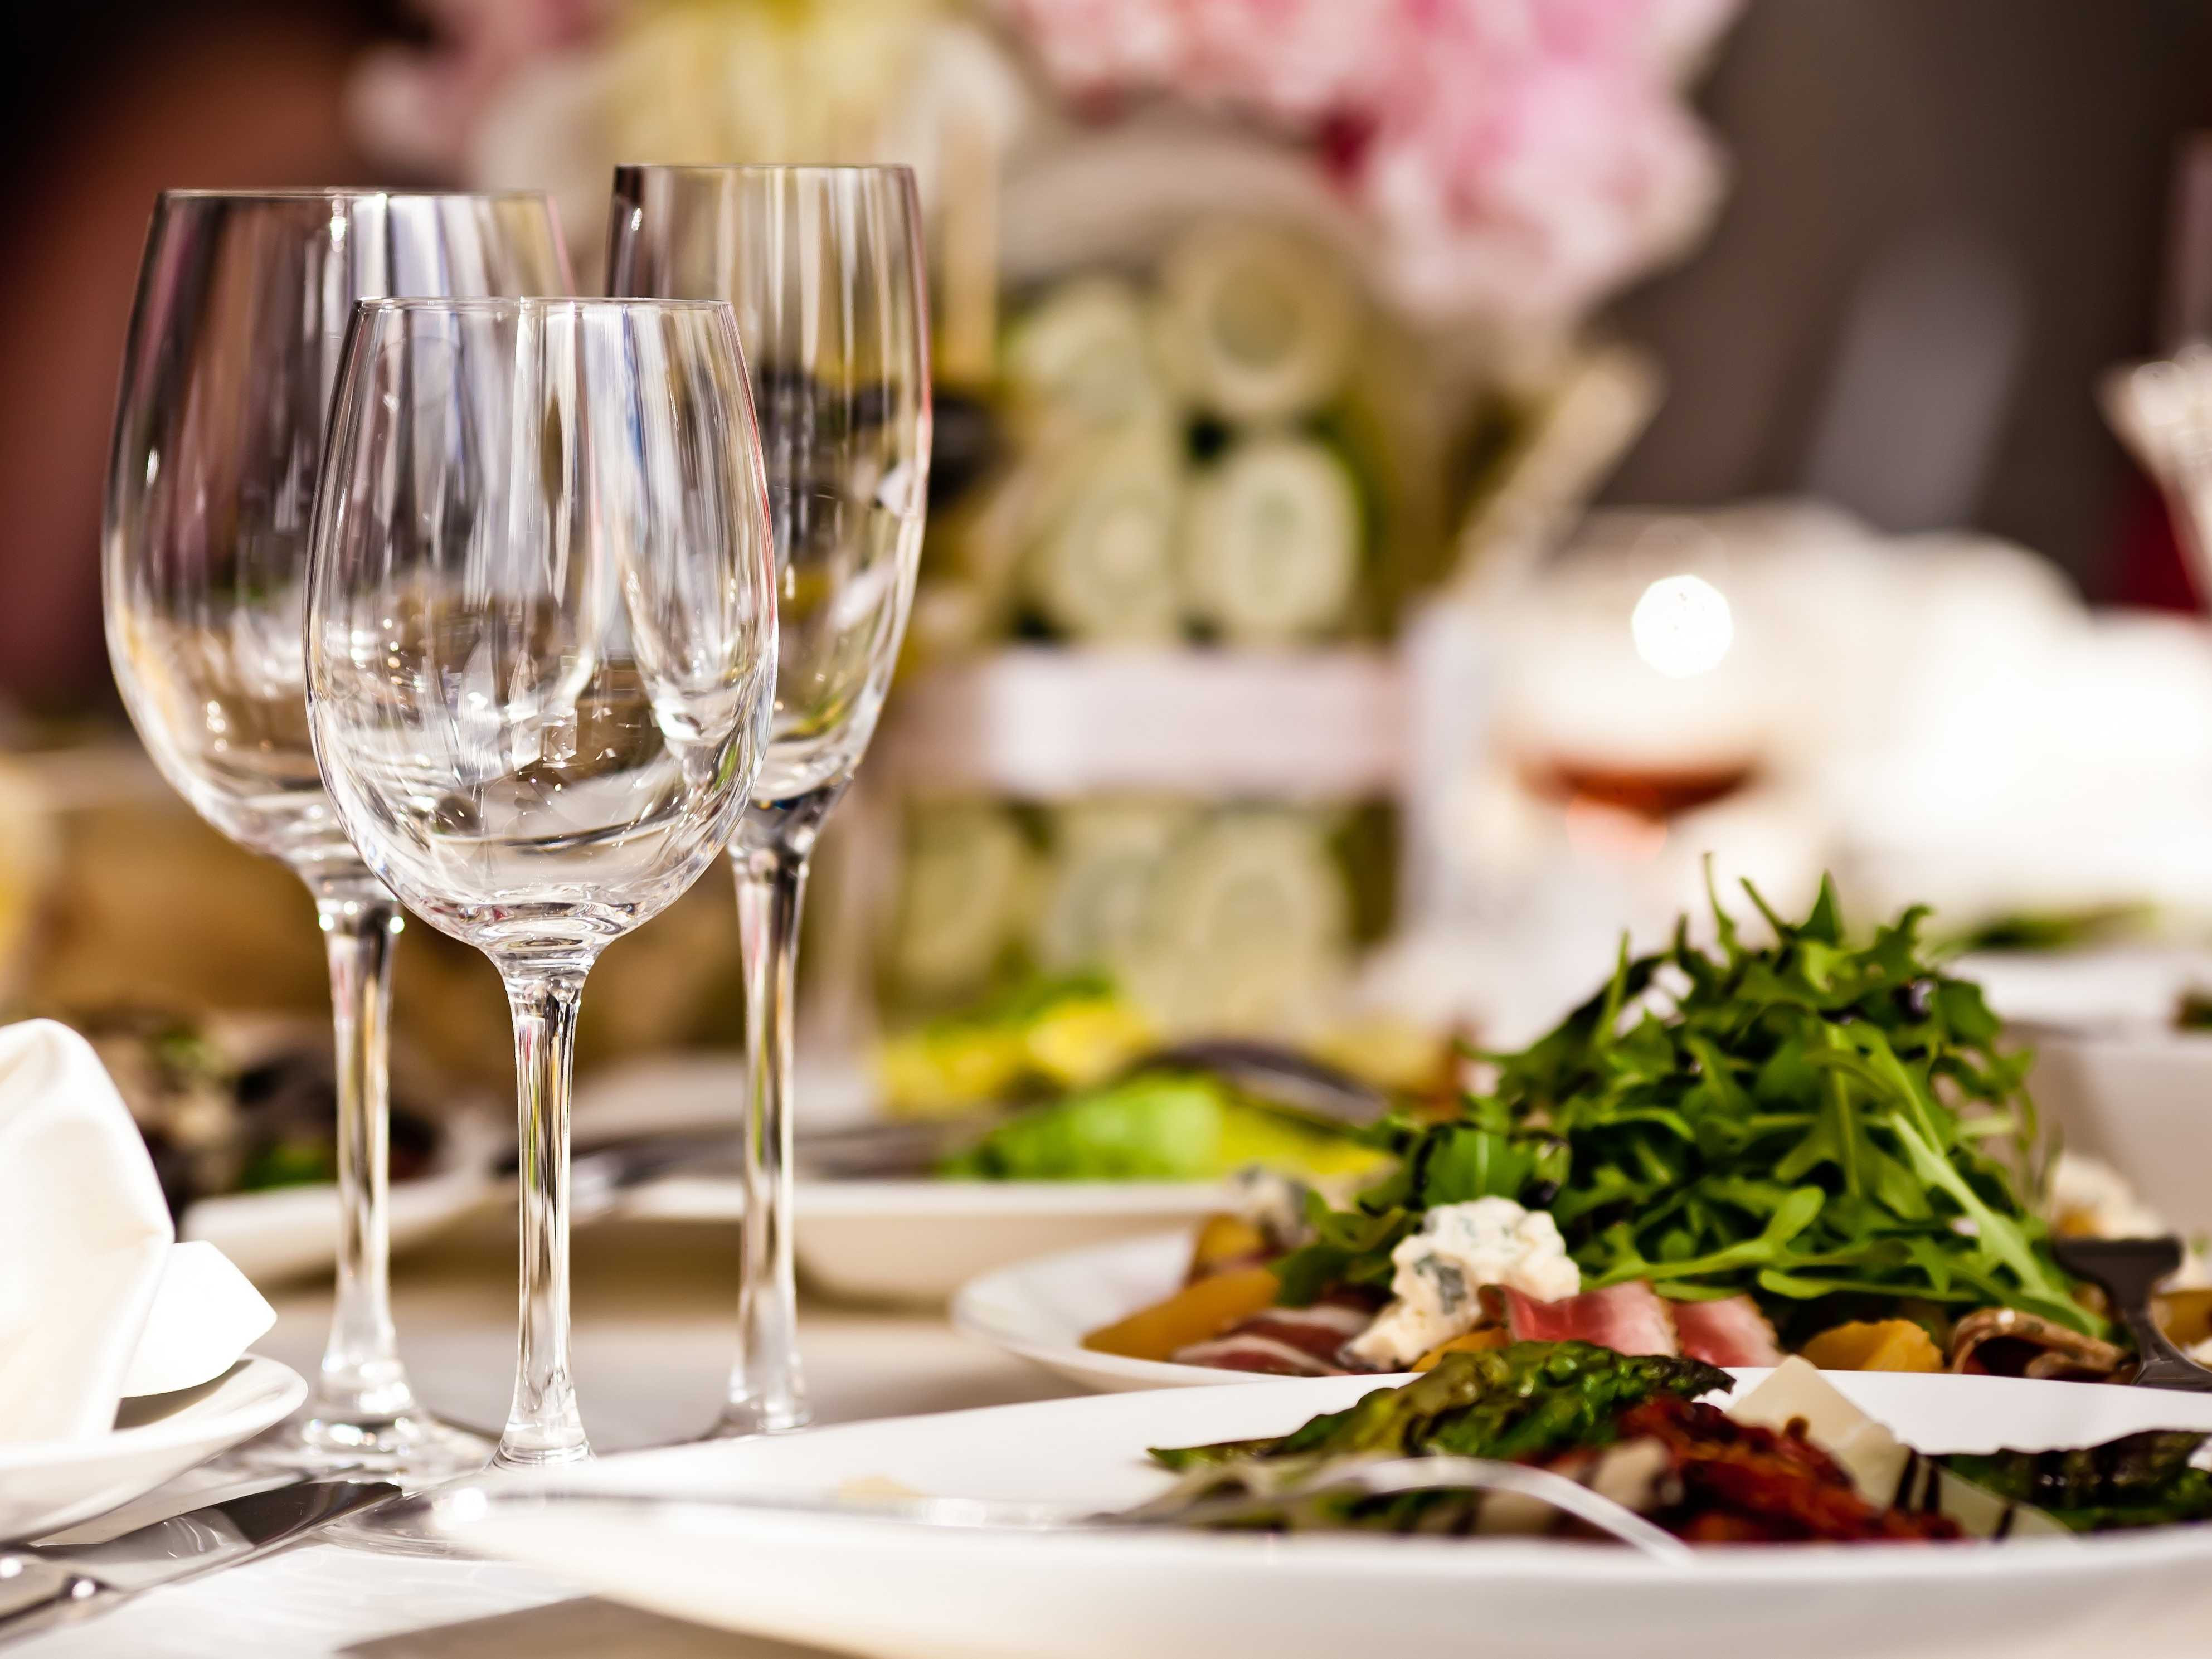 15-etiquette-rules-for-dining-at-fancy-restaurants.jpg